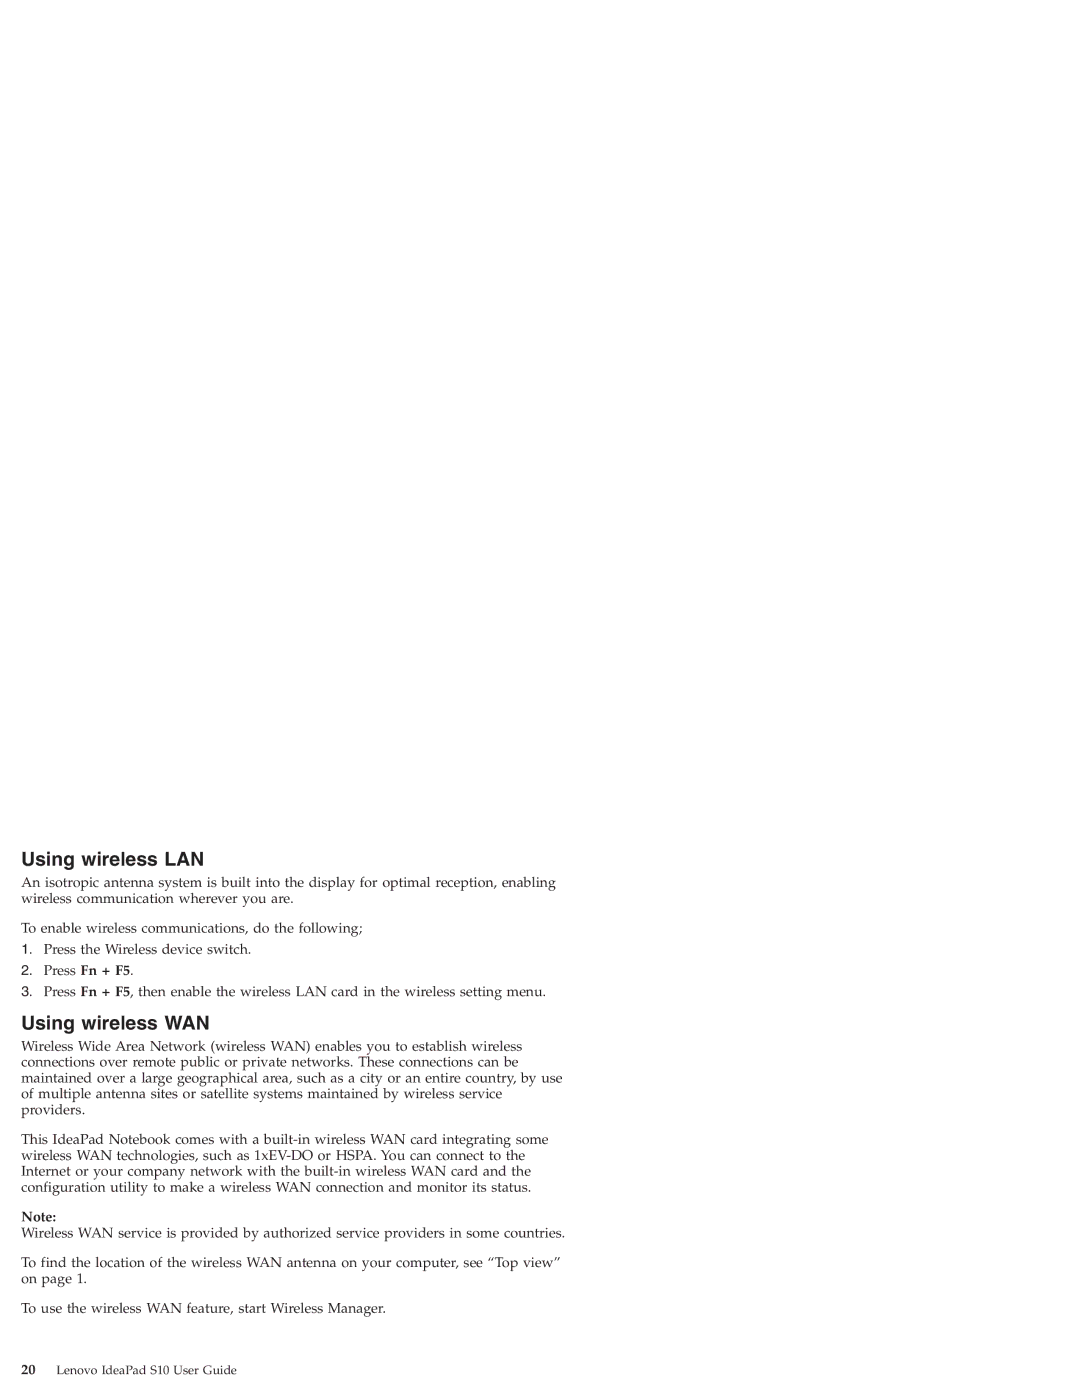 Lenovo S10 manual Using wireless LAN, Using wireless WAN 